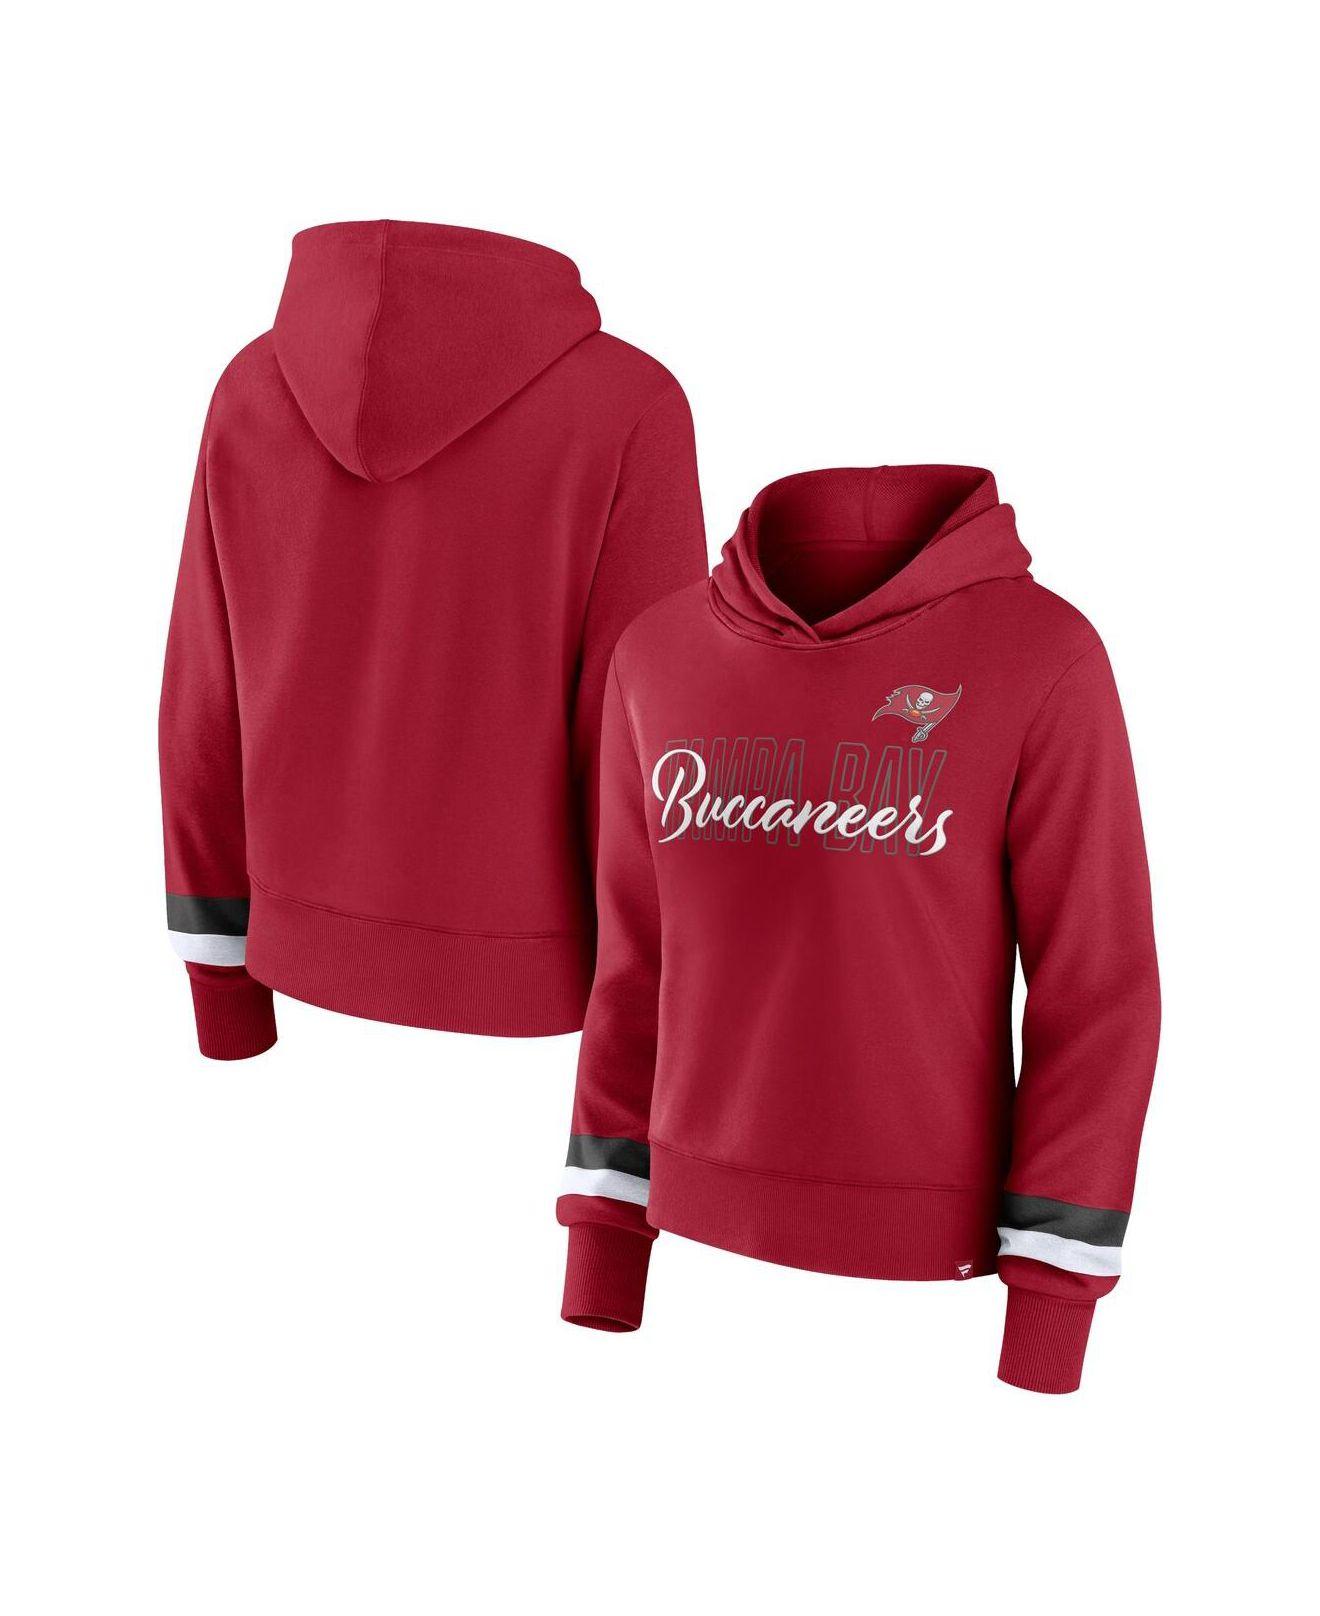 tampa bay buccaneers zip up hoodie